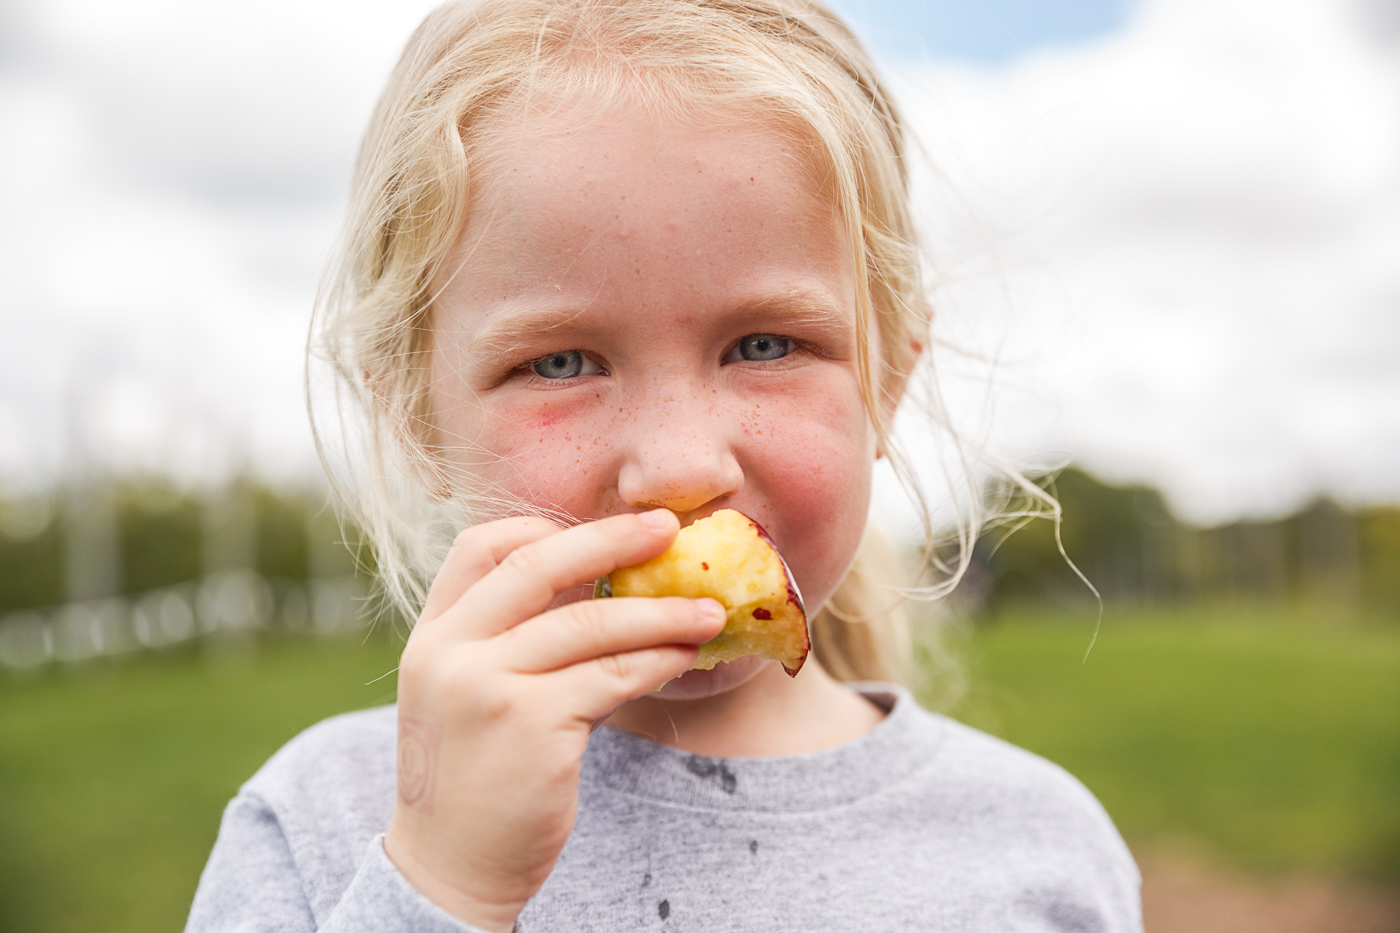 farm photographer - a young woman eats an apple